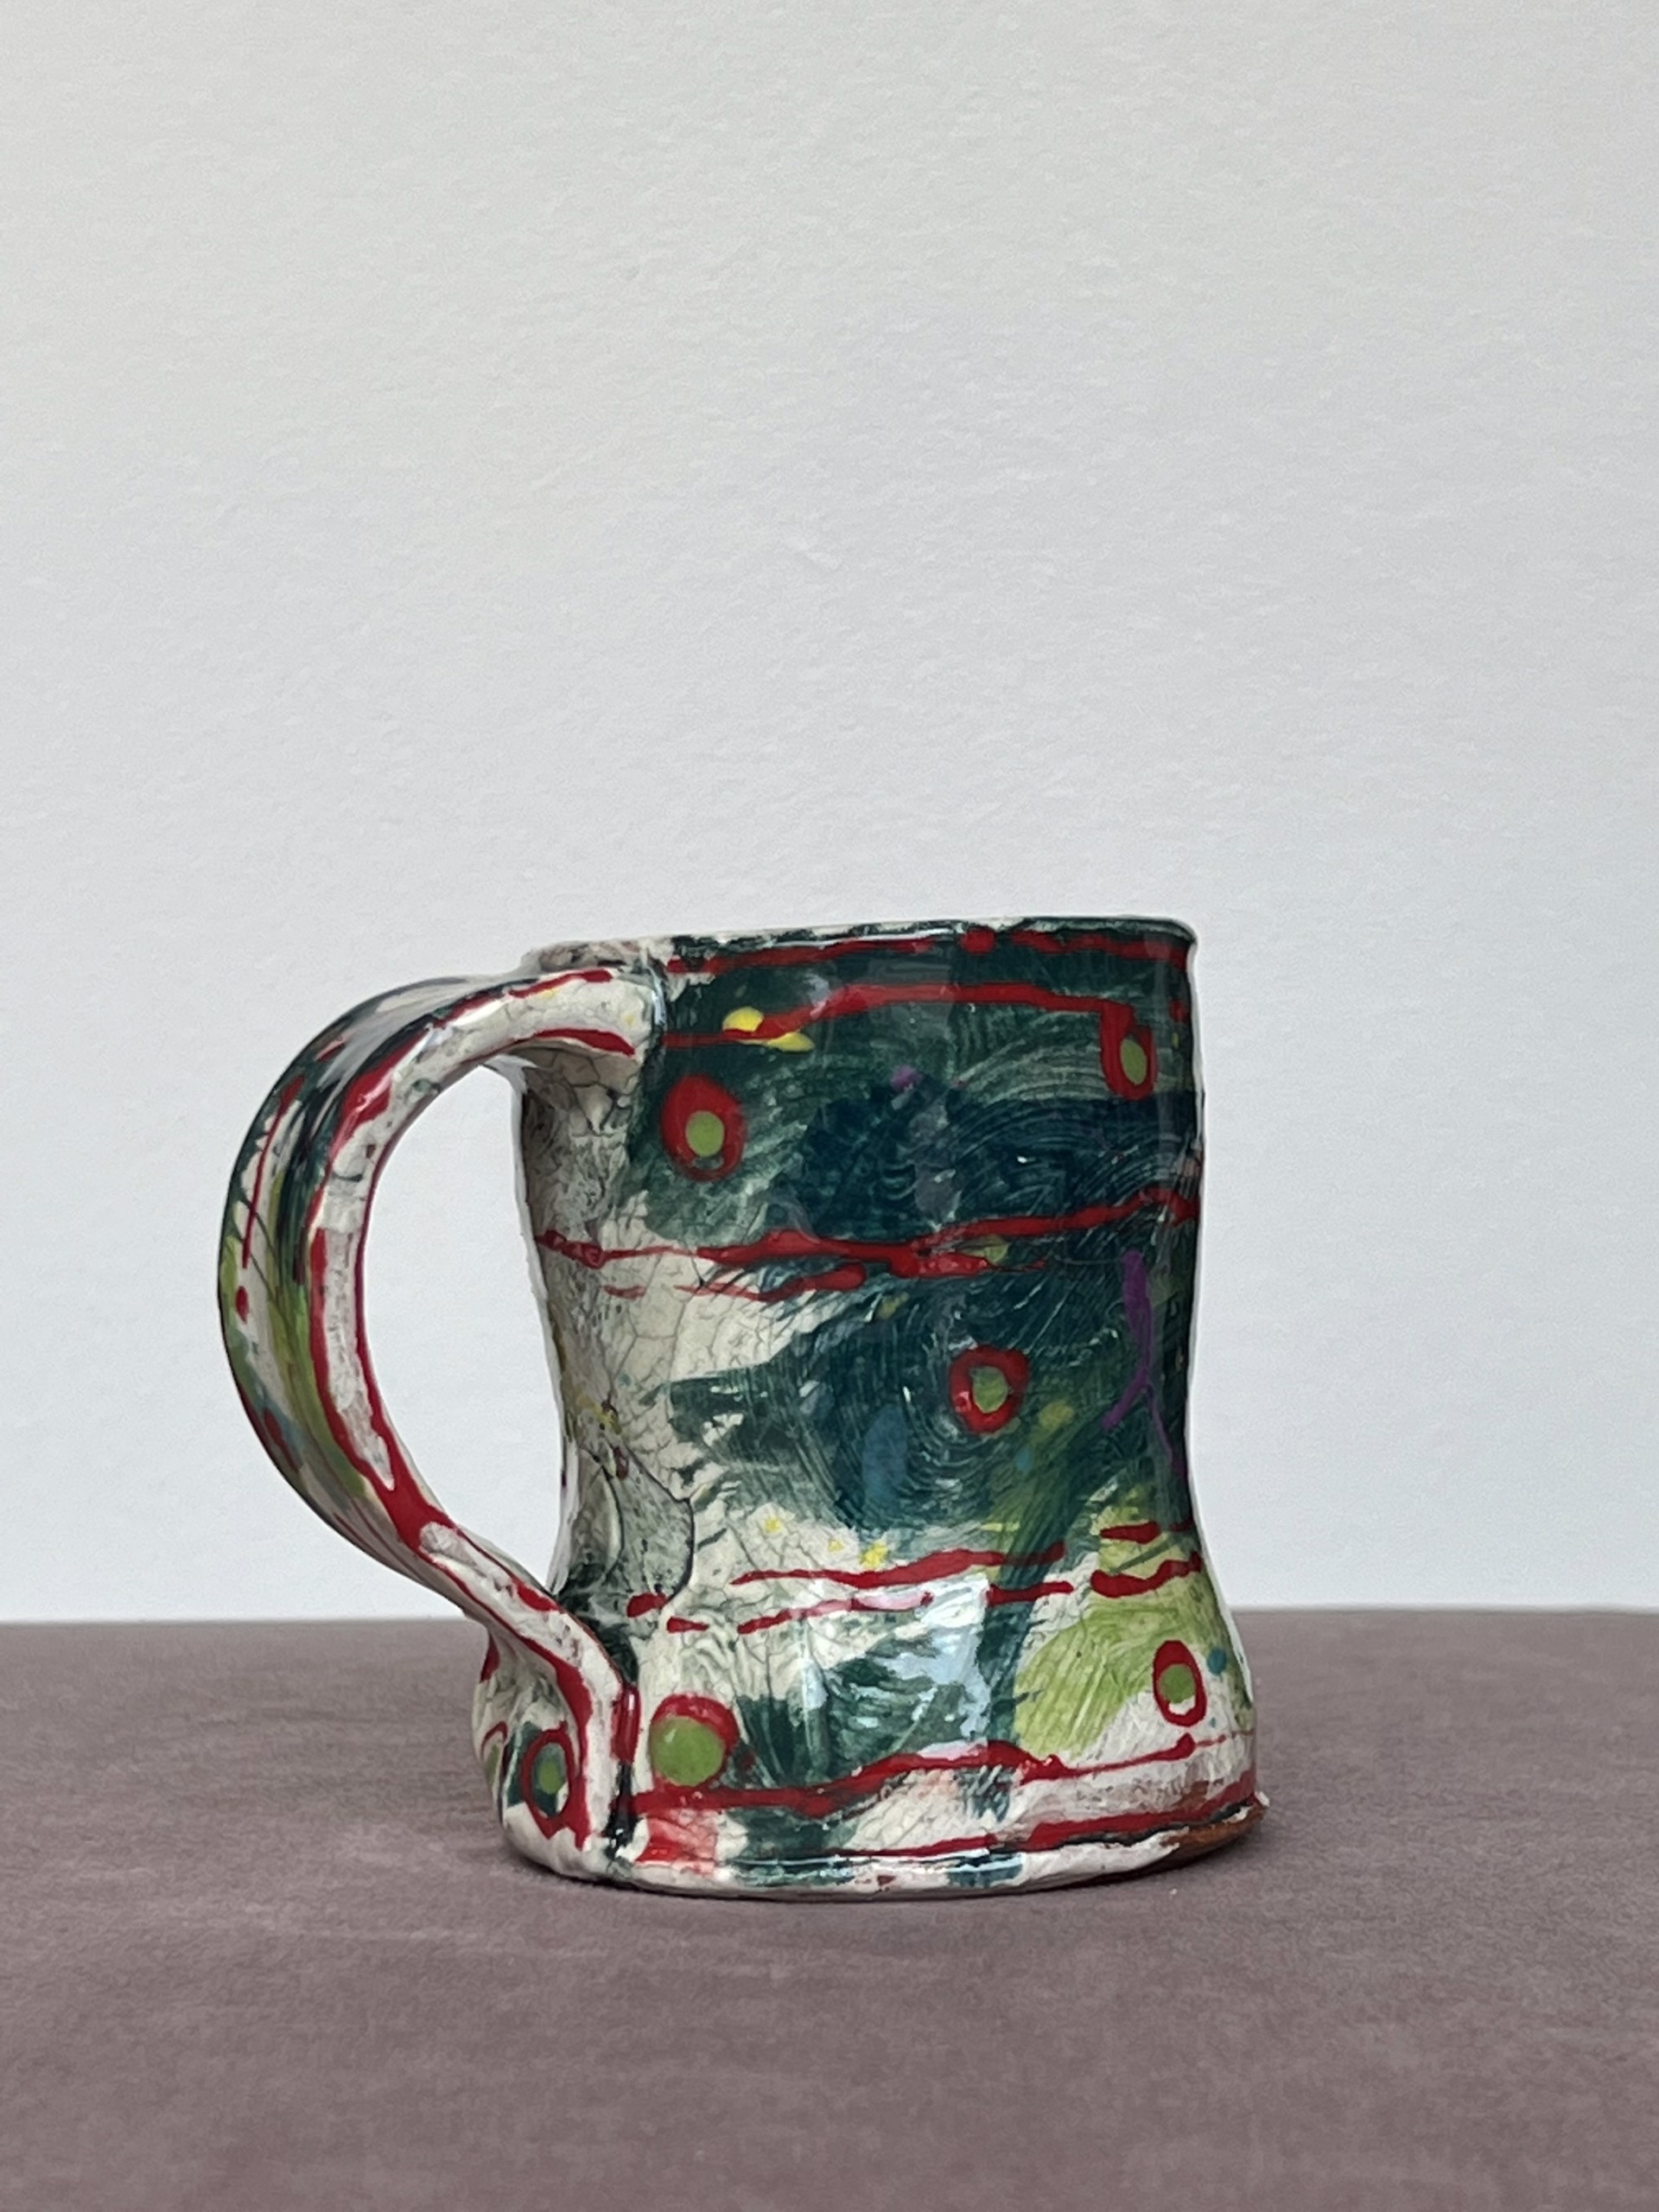 Teal & Red Mug No. 2 by Susan McGilvrey